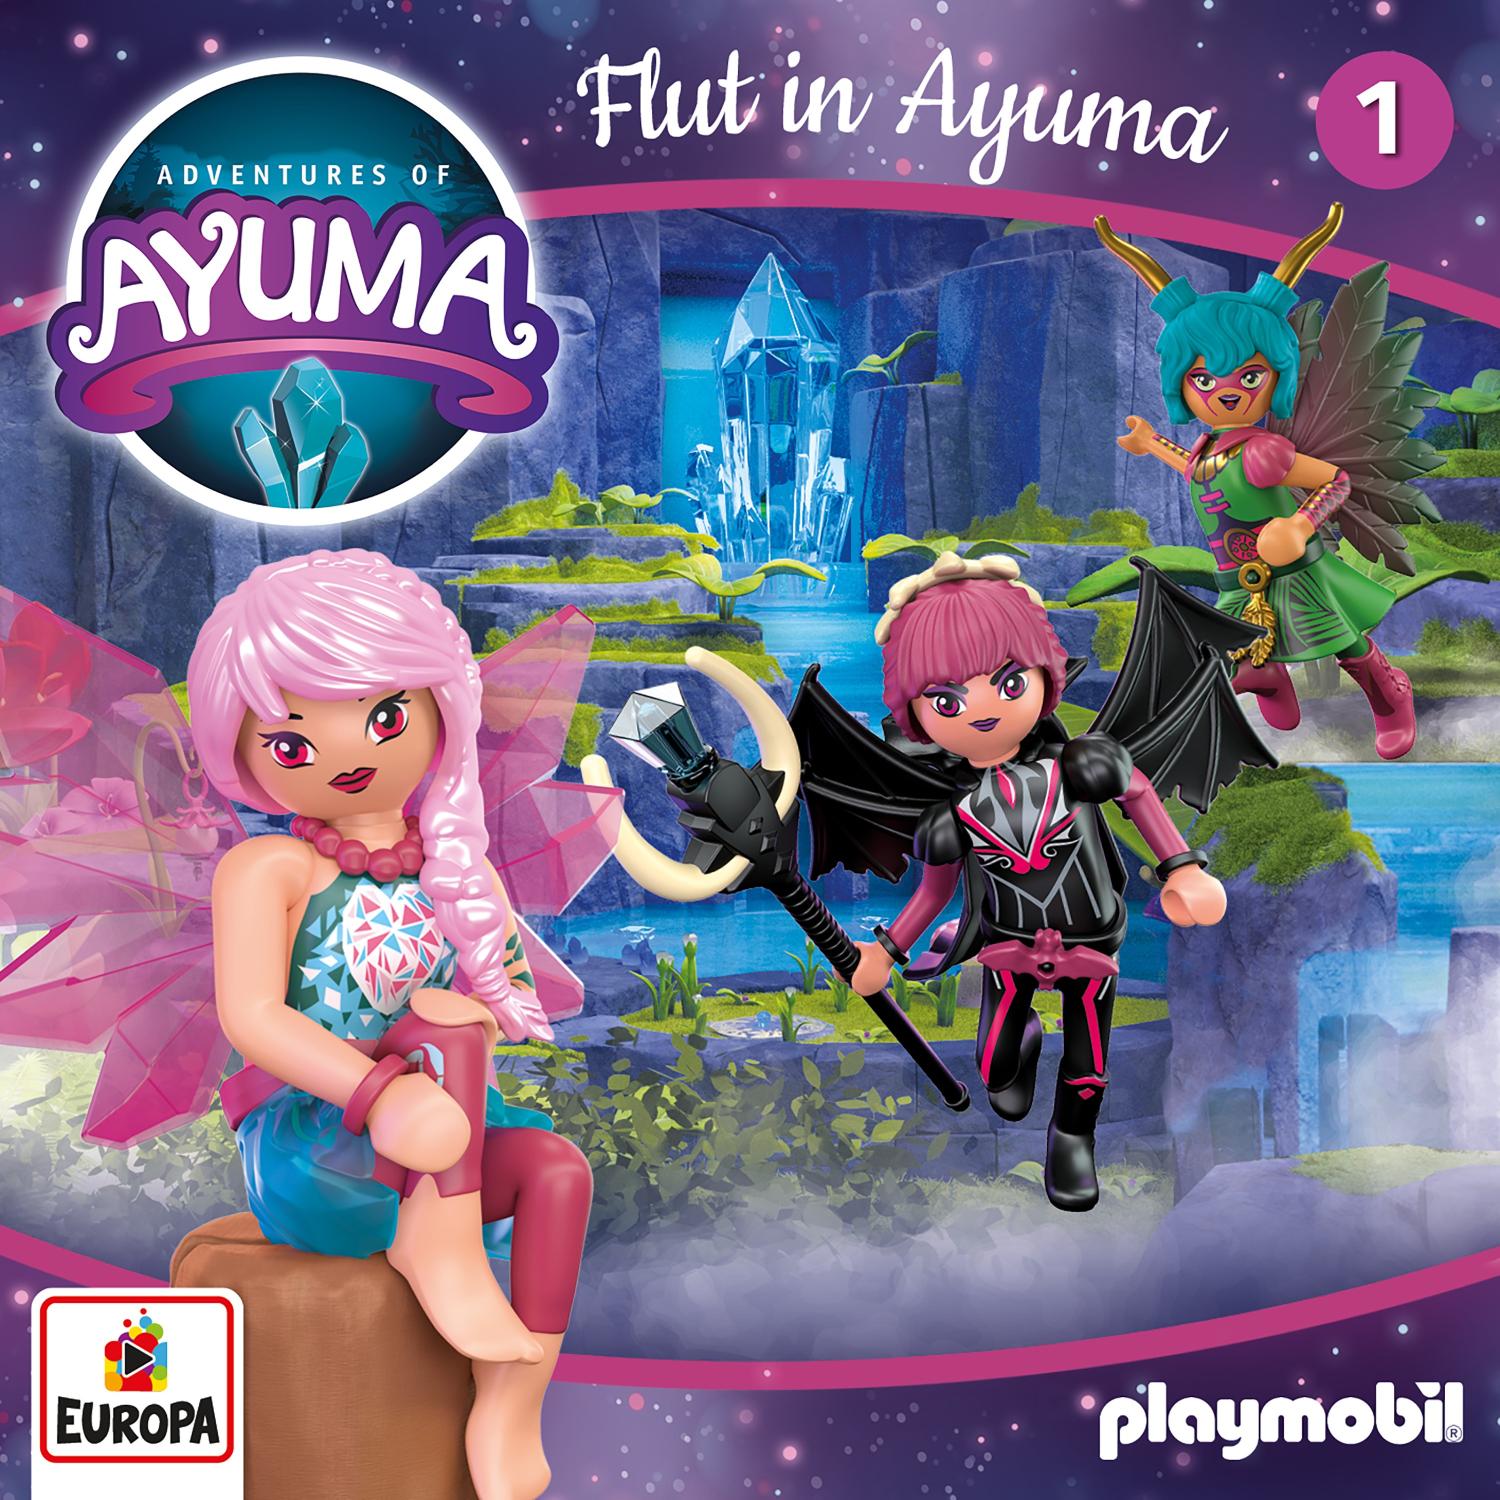 Adventures of Ayuma: Flut in Ayuma